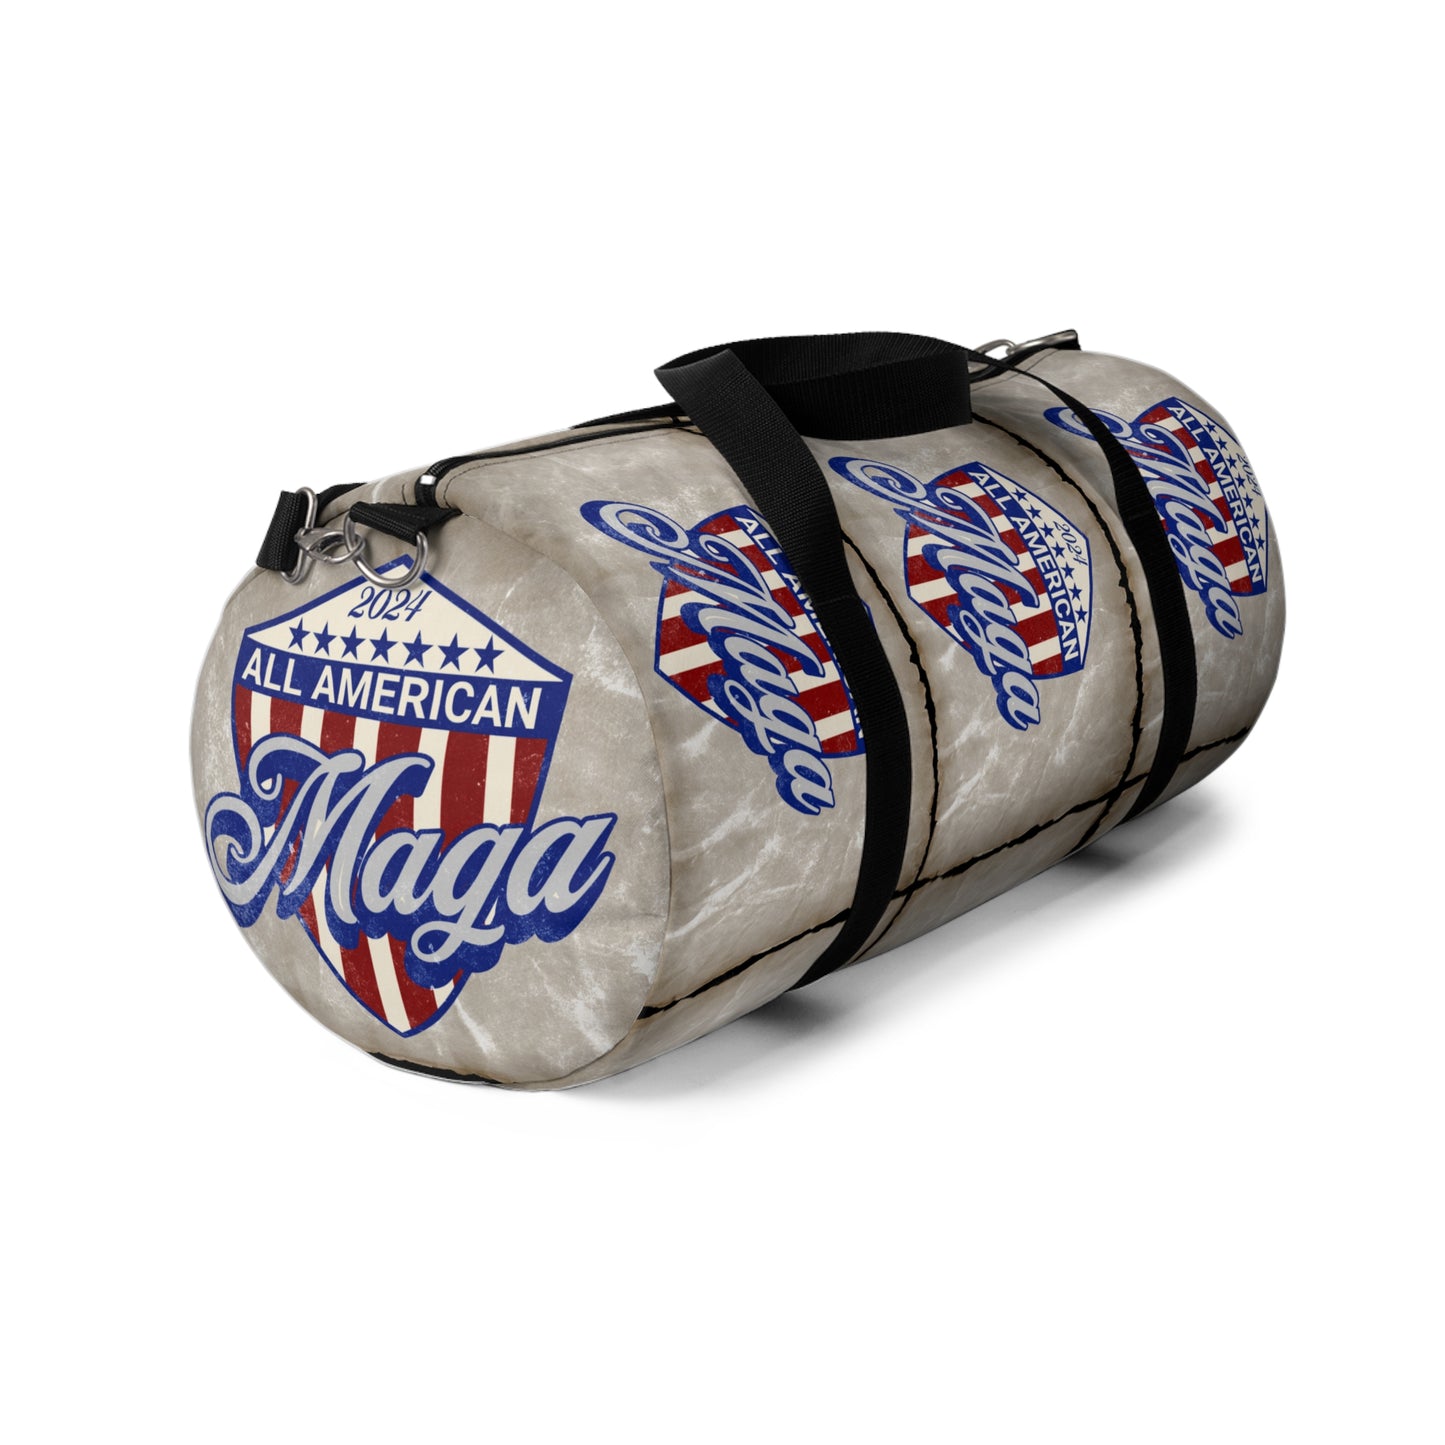 All American MAGA Duffel Bag